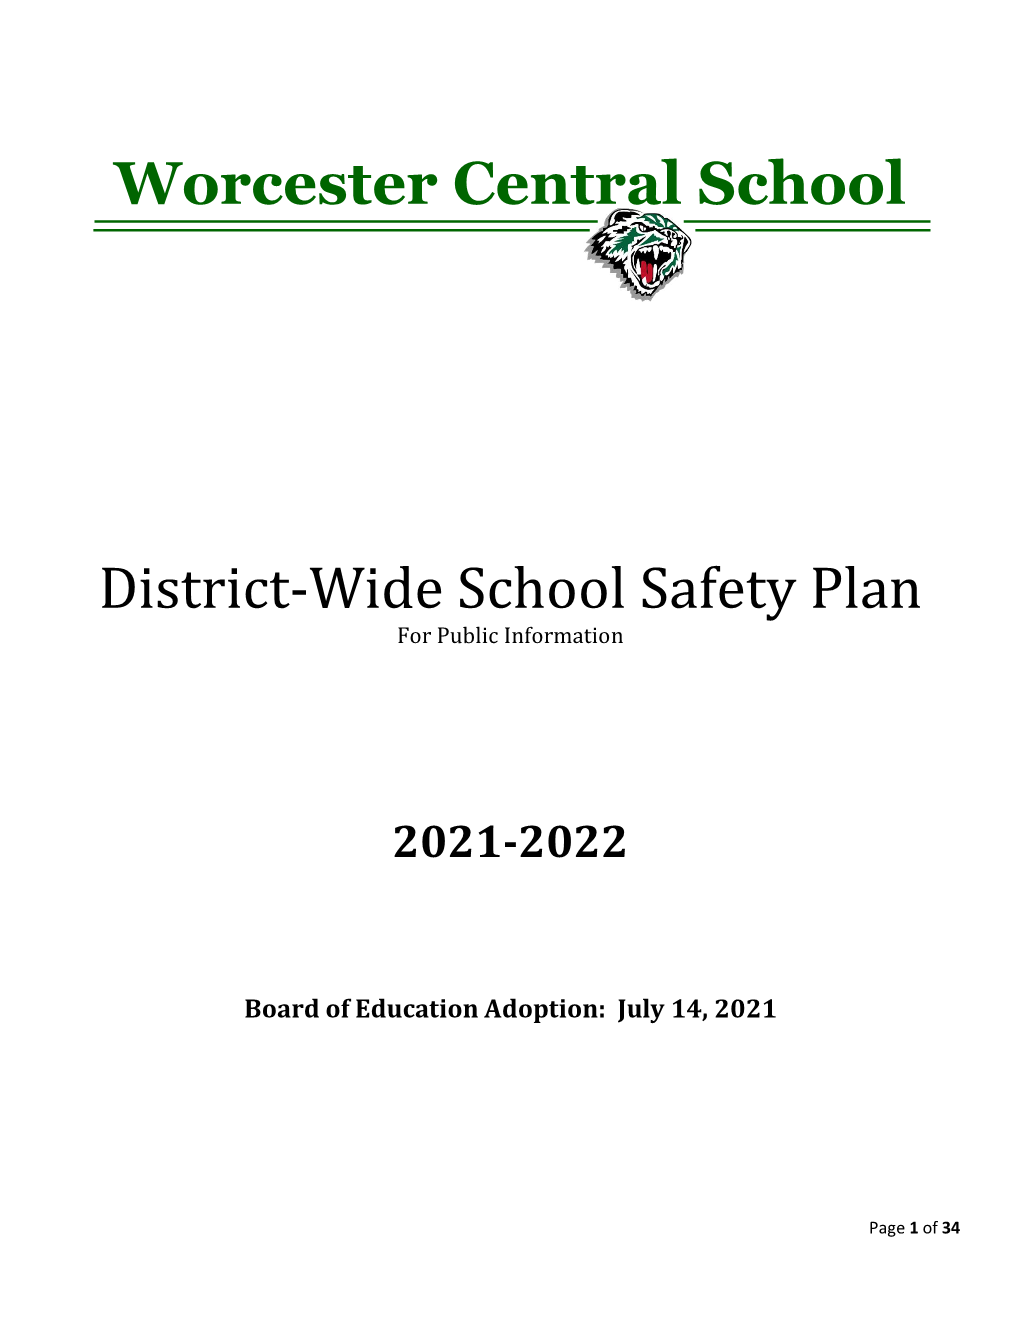 Worcester Central School District-Wide School Safety Plan